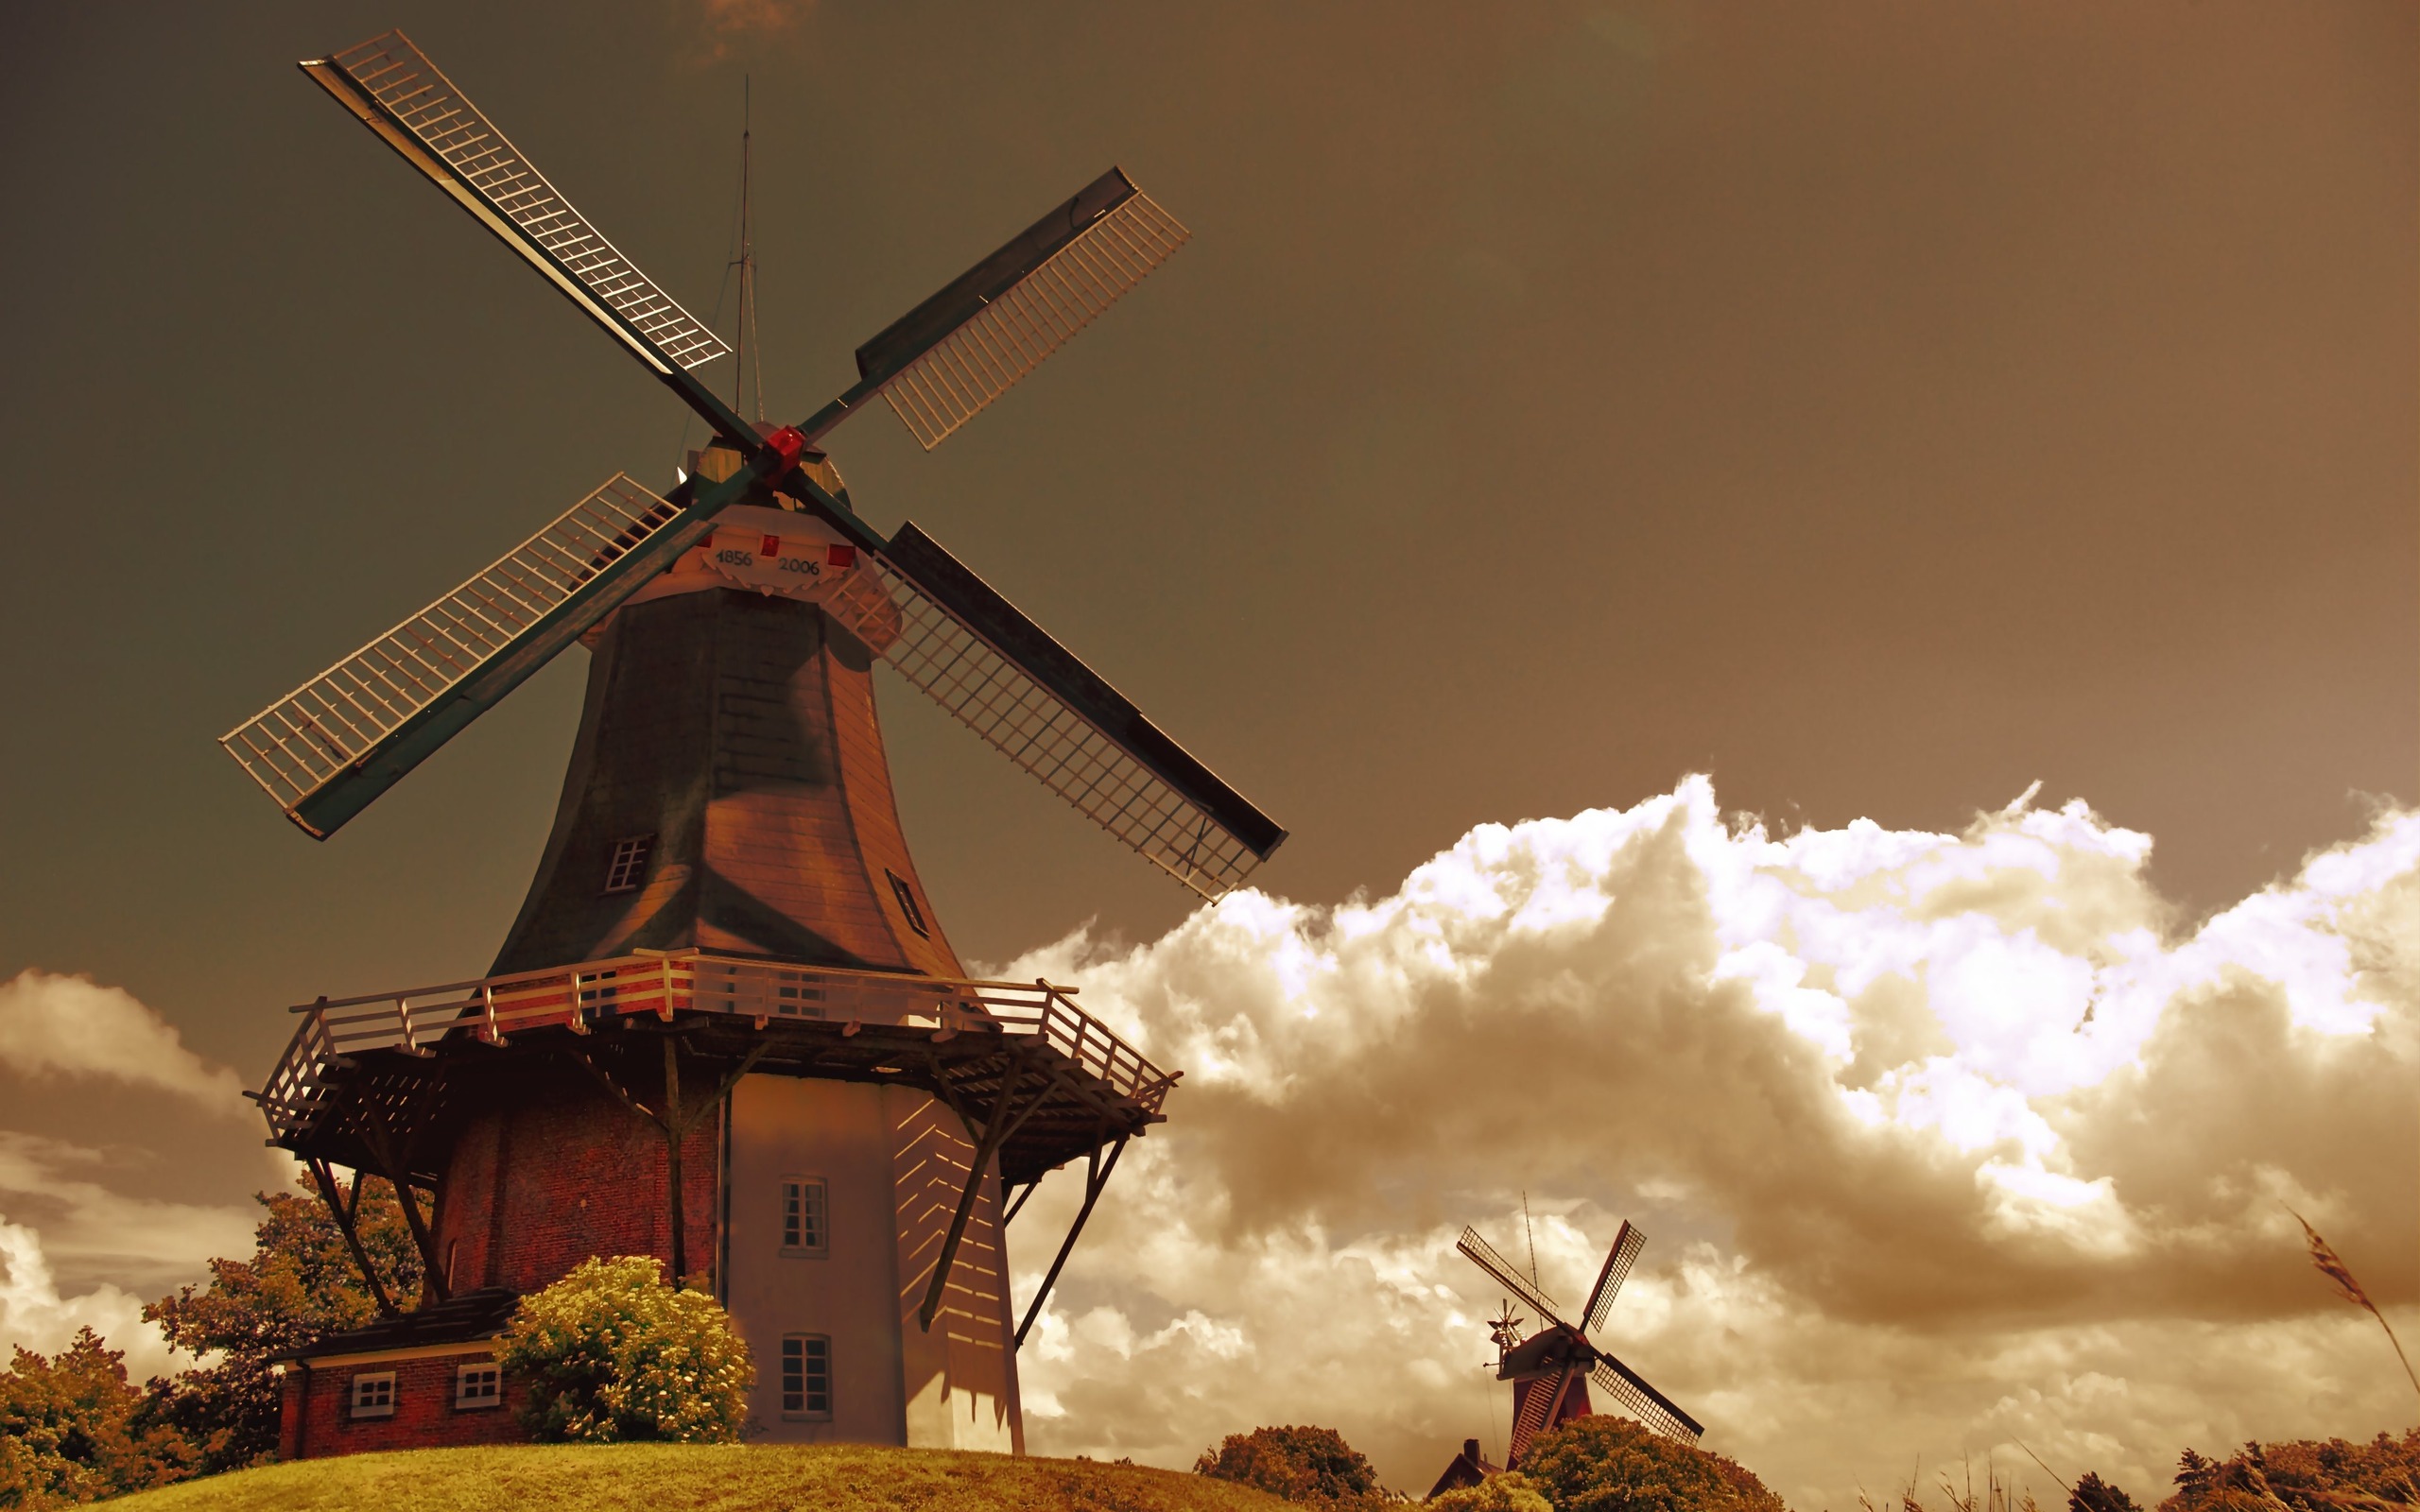 desktop Images man made, windmill